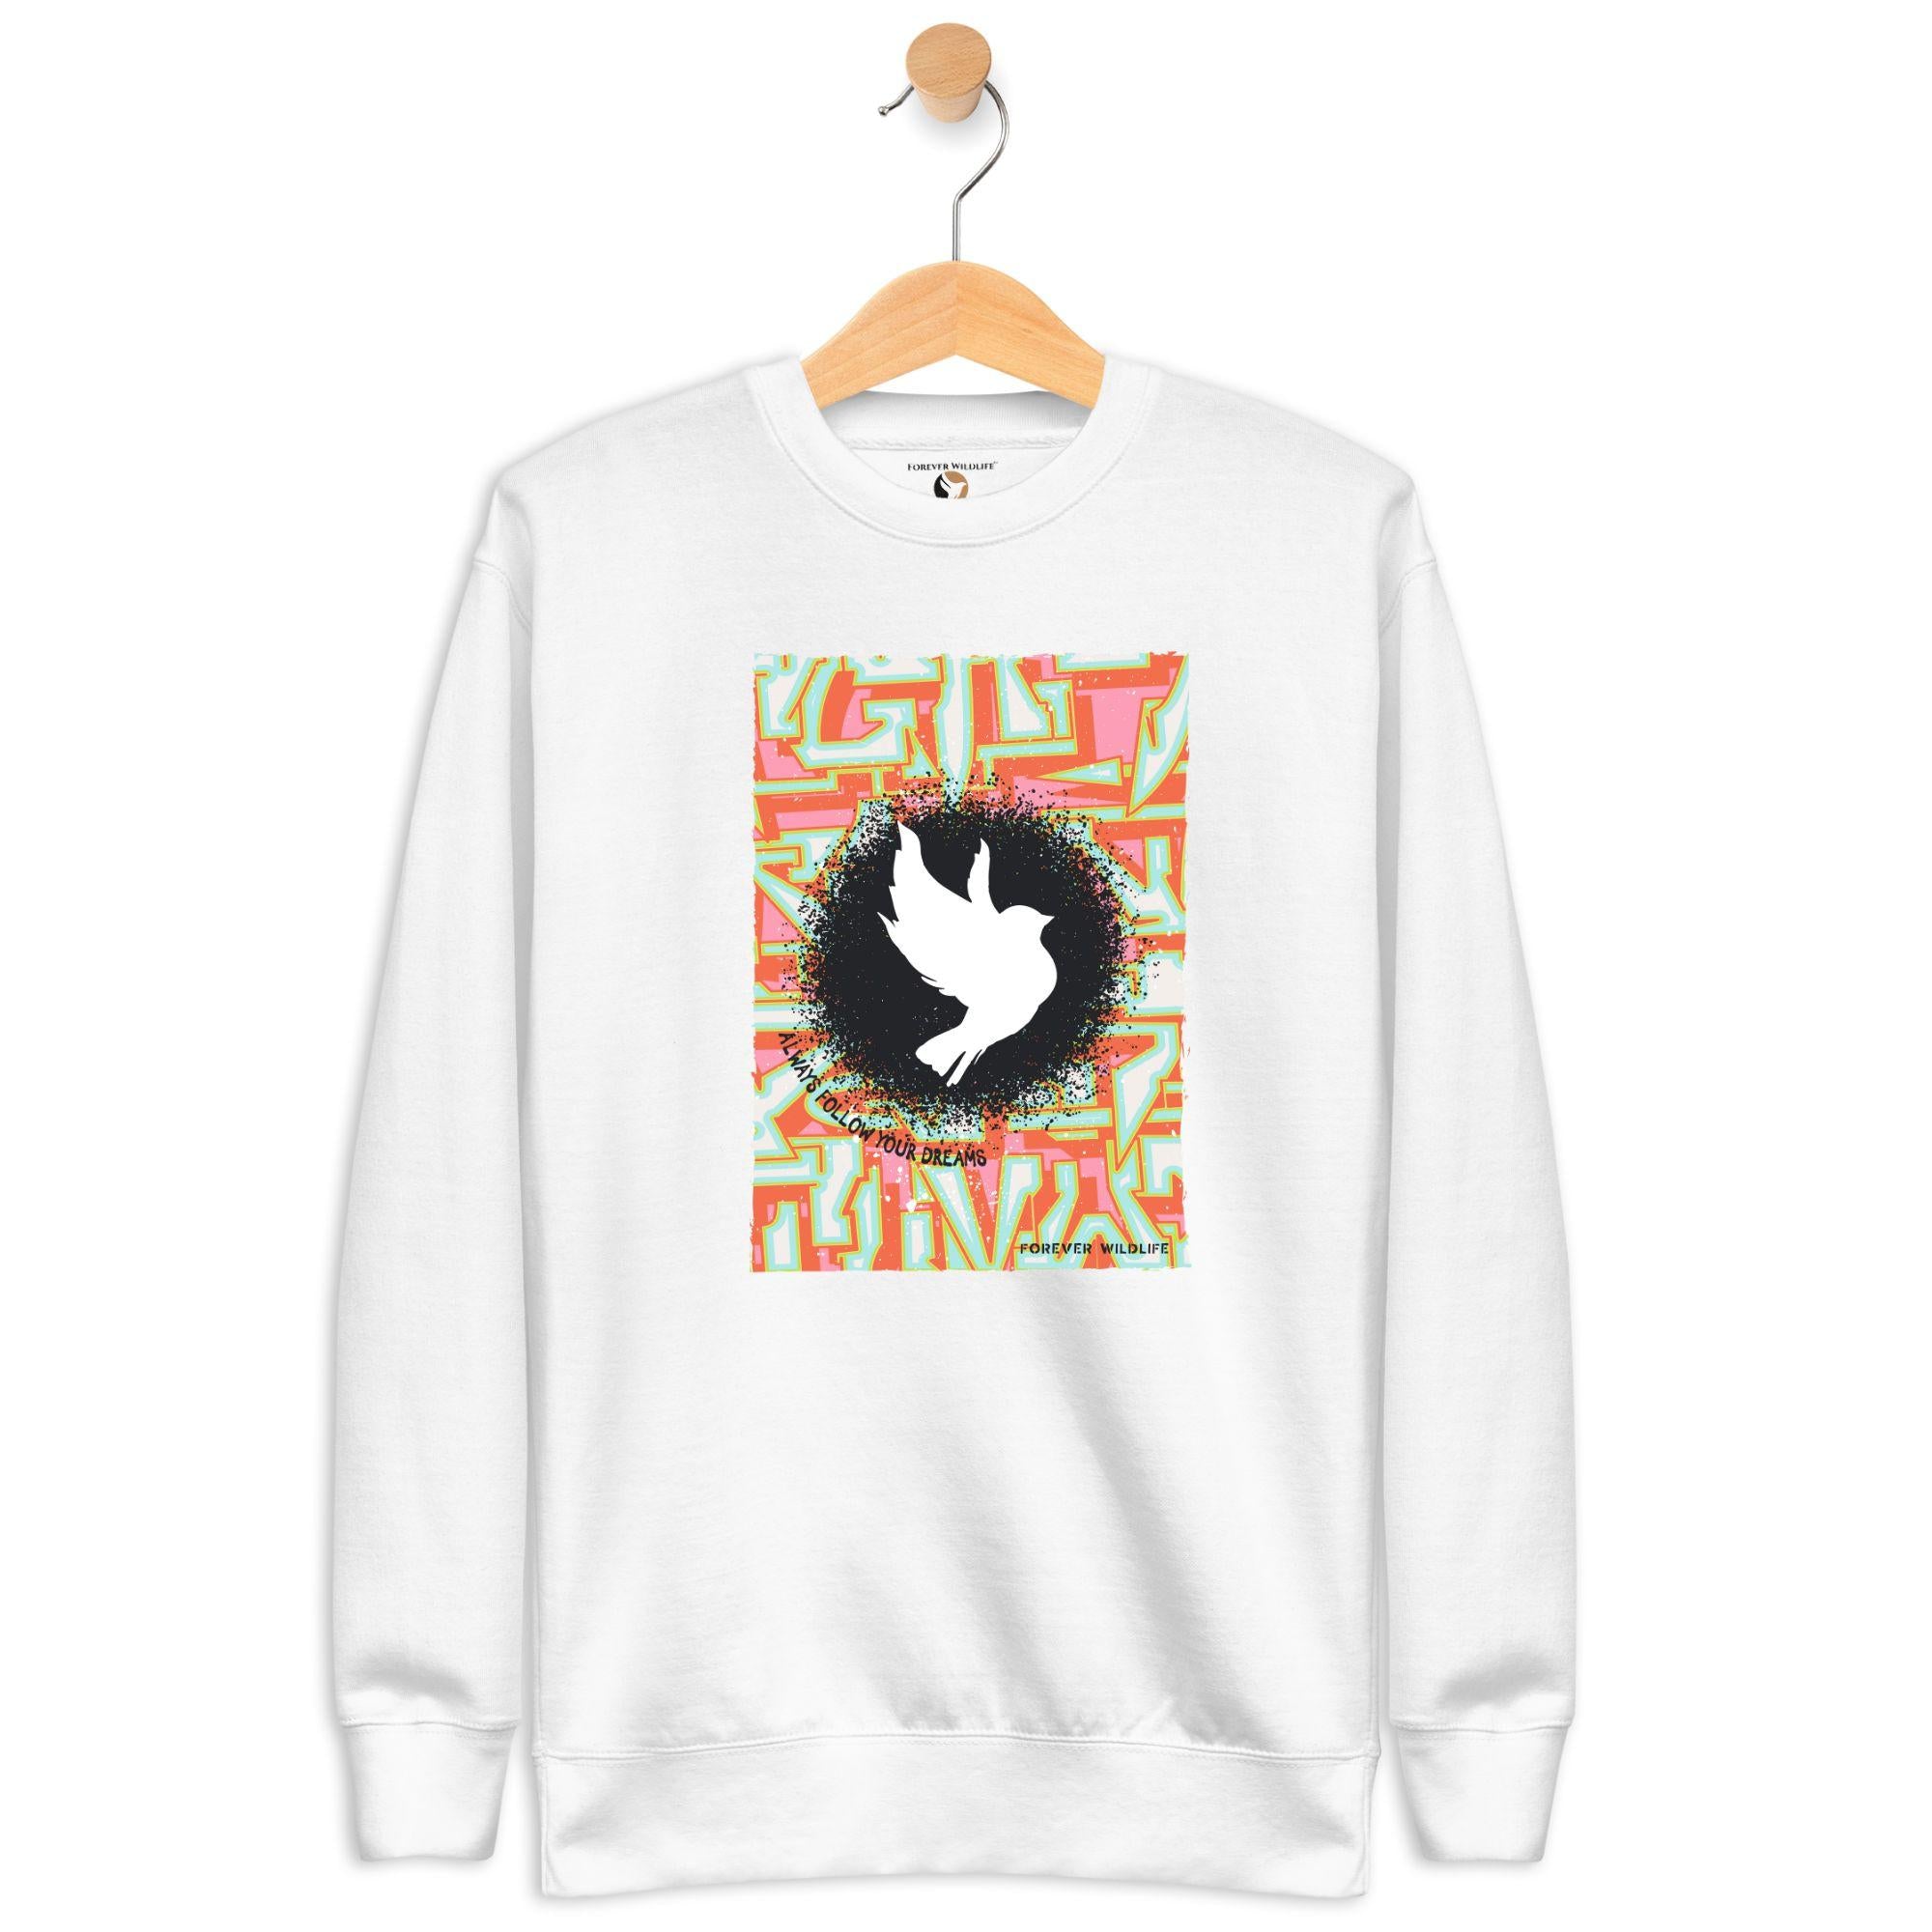 Dove Sweatshirt in White-Premium Wildlife Animal Inspiration Sweatshirt Design with 'Always Follow Your Dreams' text, part of Wildlife Sweatshirts & Clothing from Forever Wildlife.